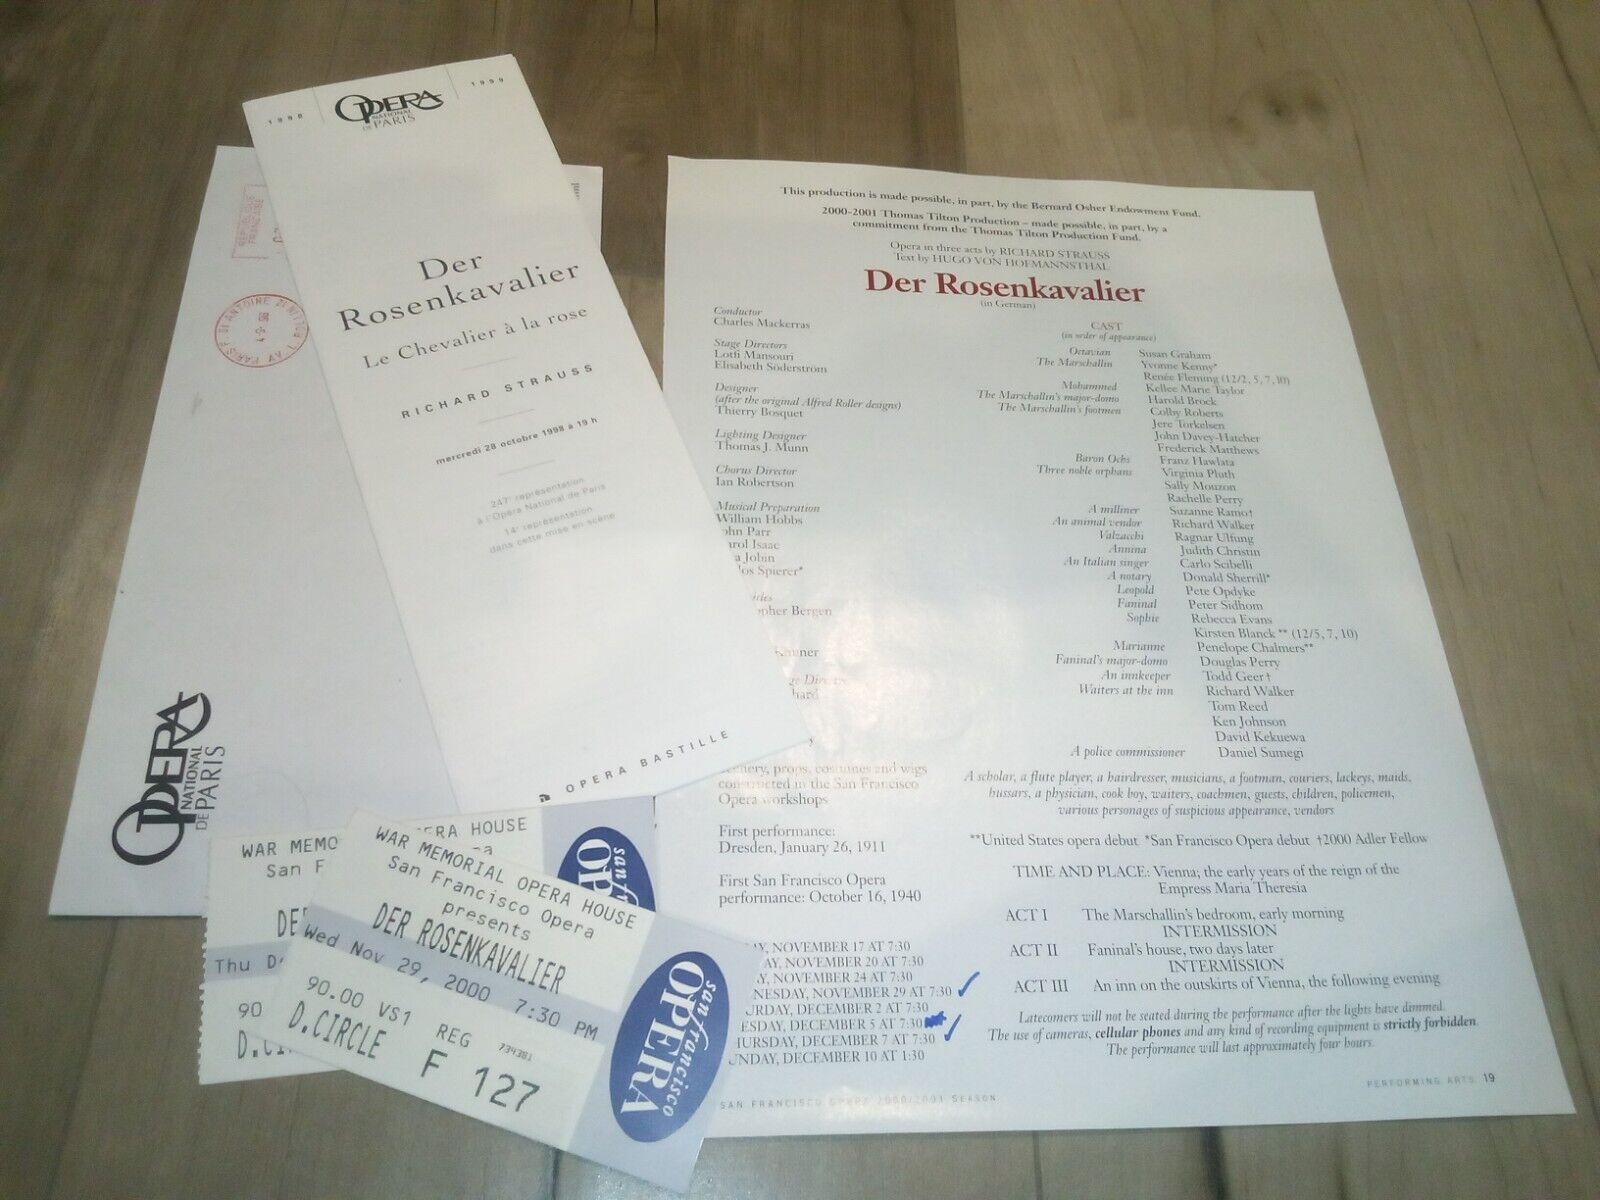 Der Rosenkavalier 2 Souvenir Program July 1998 Paris 200 S.F. Opera House Ticket